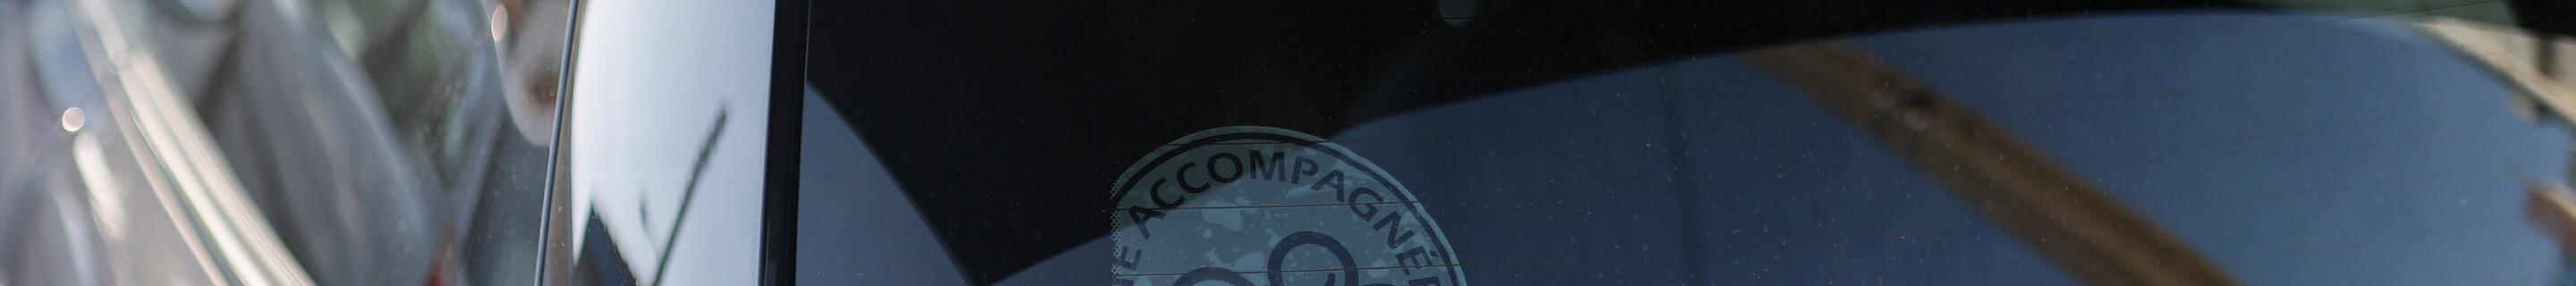 Mini F56 Cooper S John Cooper Works GP